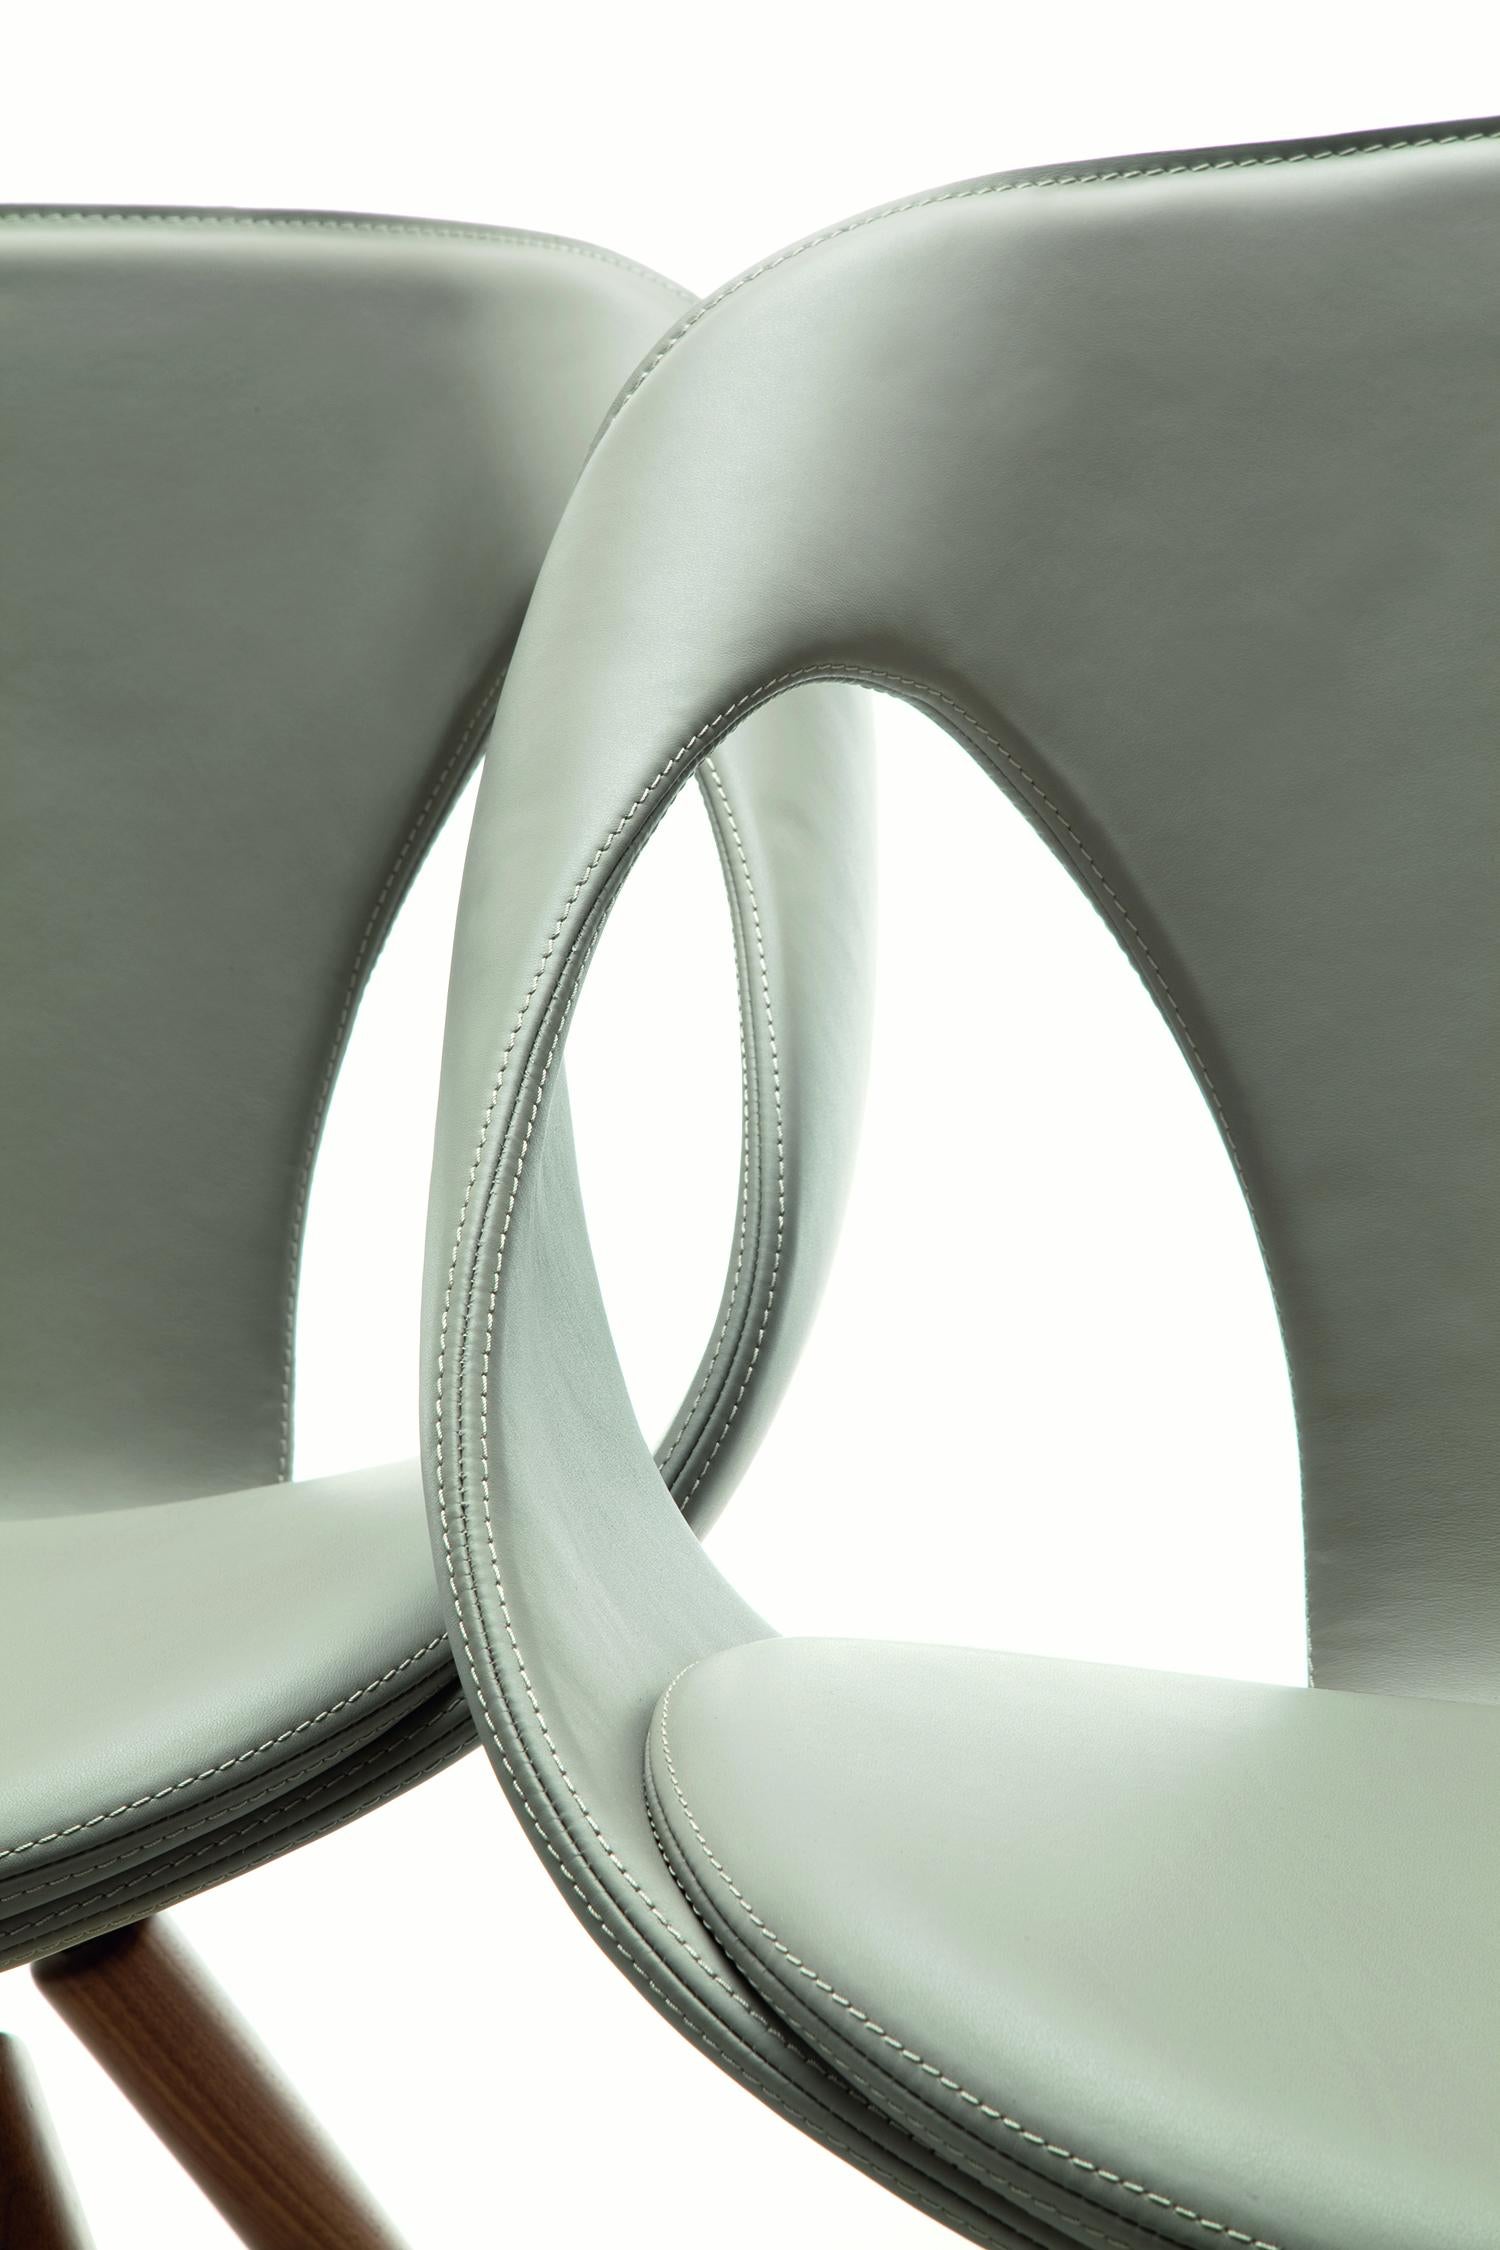 UP Upholstered Leather Dining Room Chair, Contemporary, Modern Italian Design (Internationaler Stil)